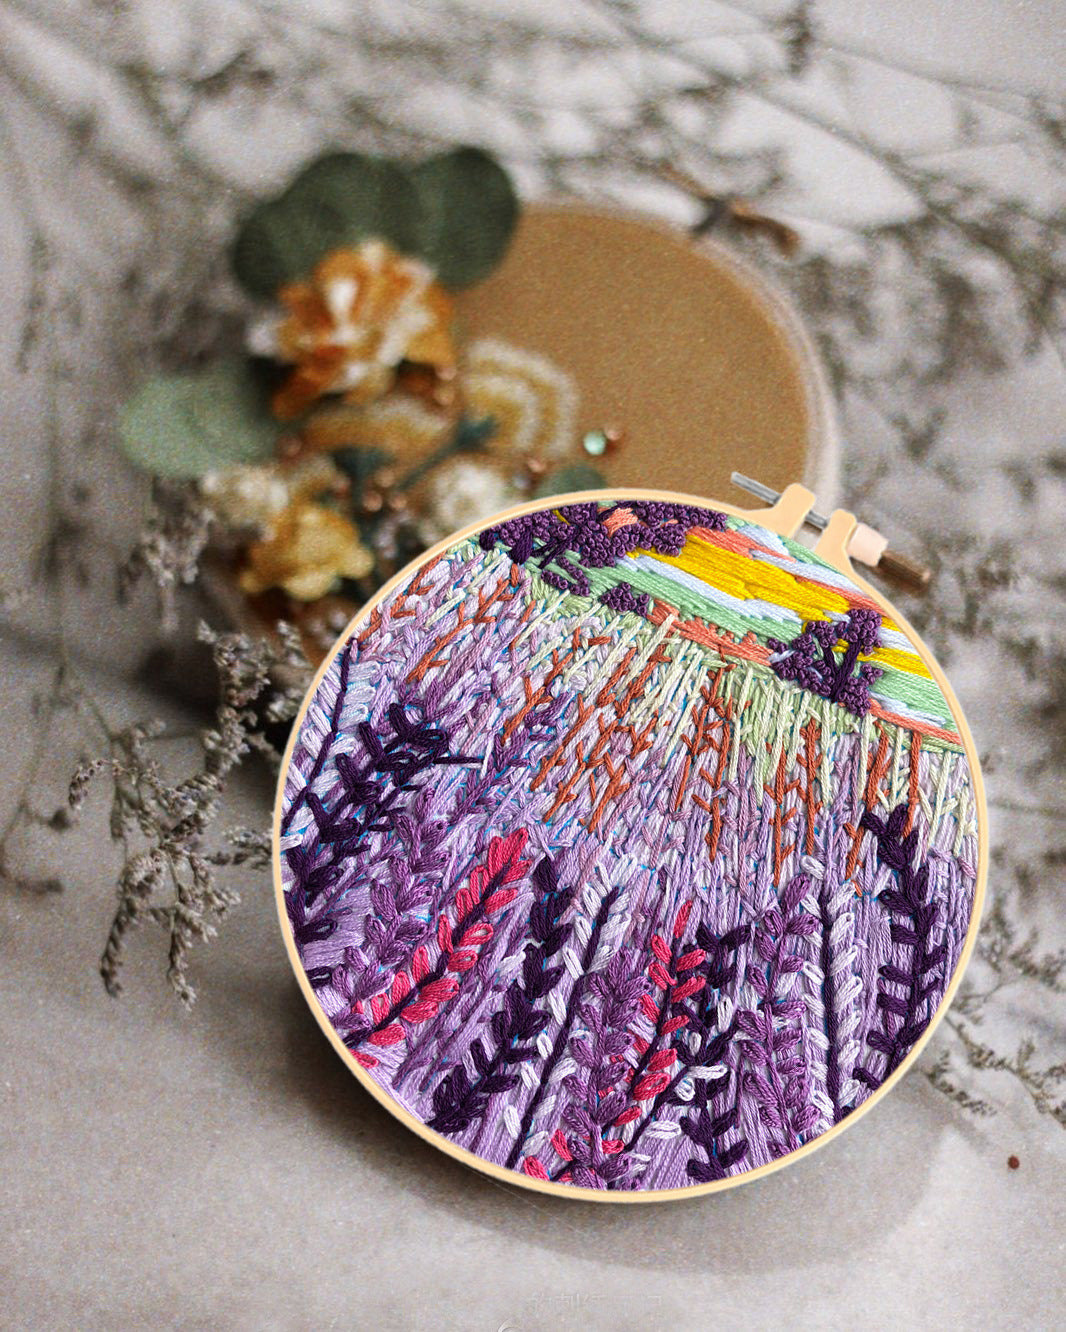 Sea Of Flowers Embroidery Kits - 1Pcs